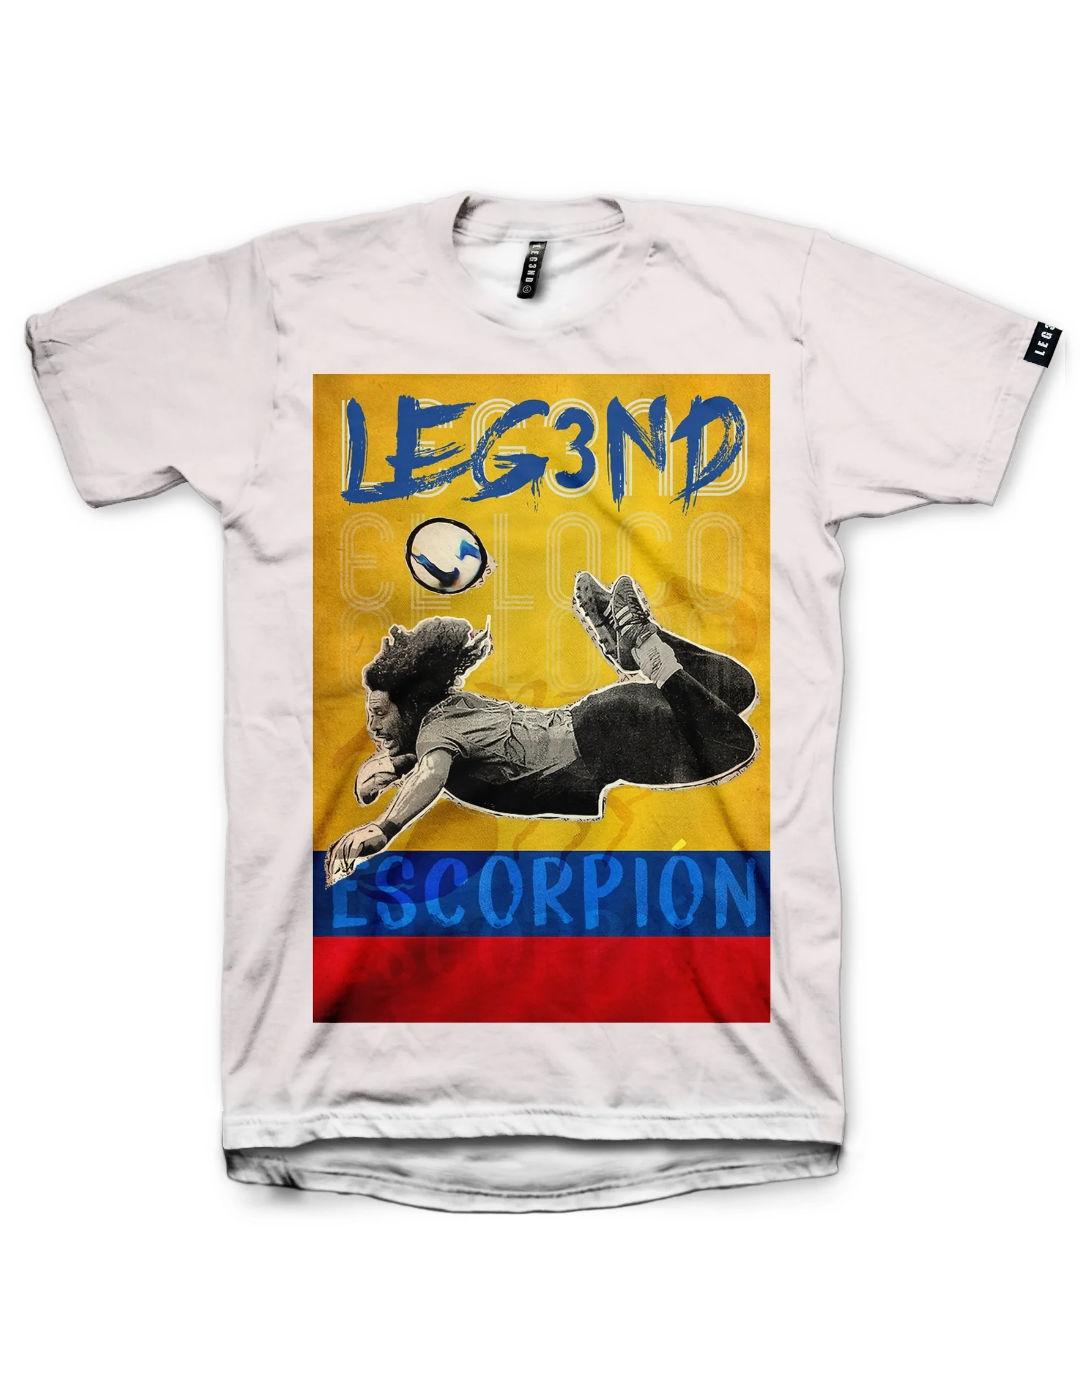 Camiseta Leg3nd Escorpion blanca-b